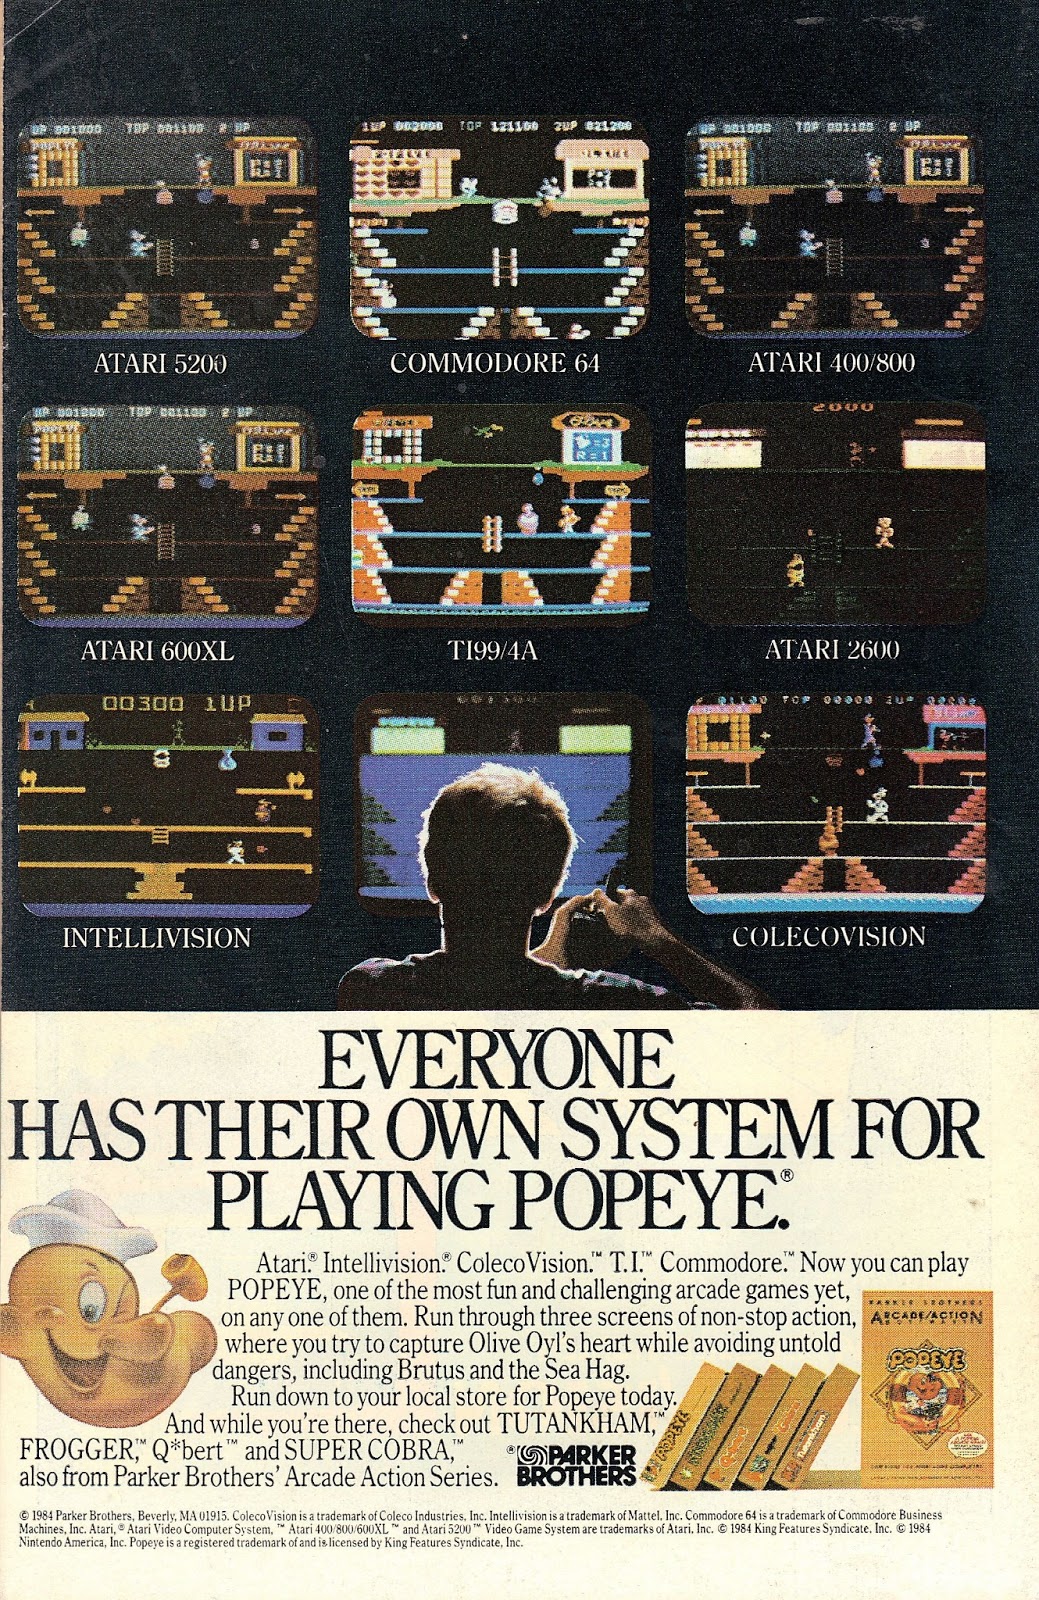 Popeye+system.JPG